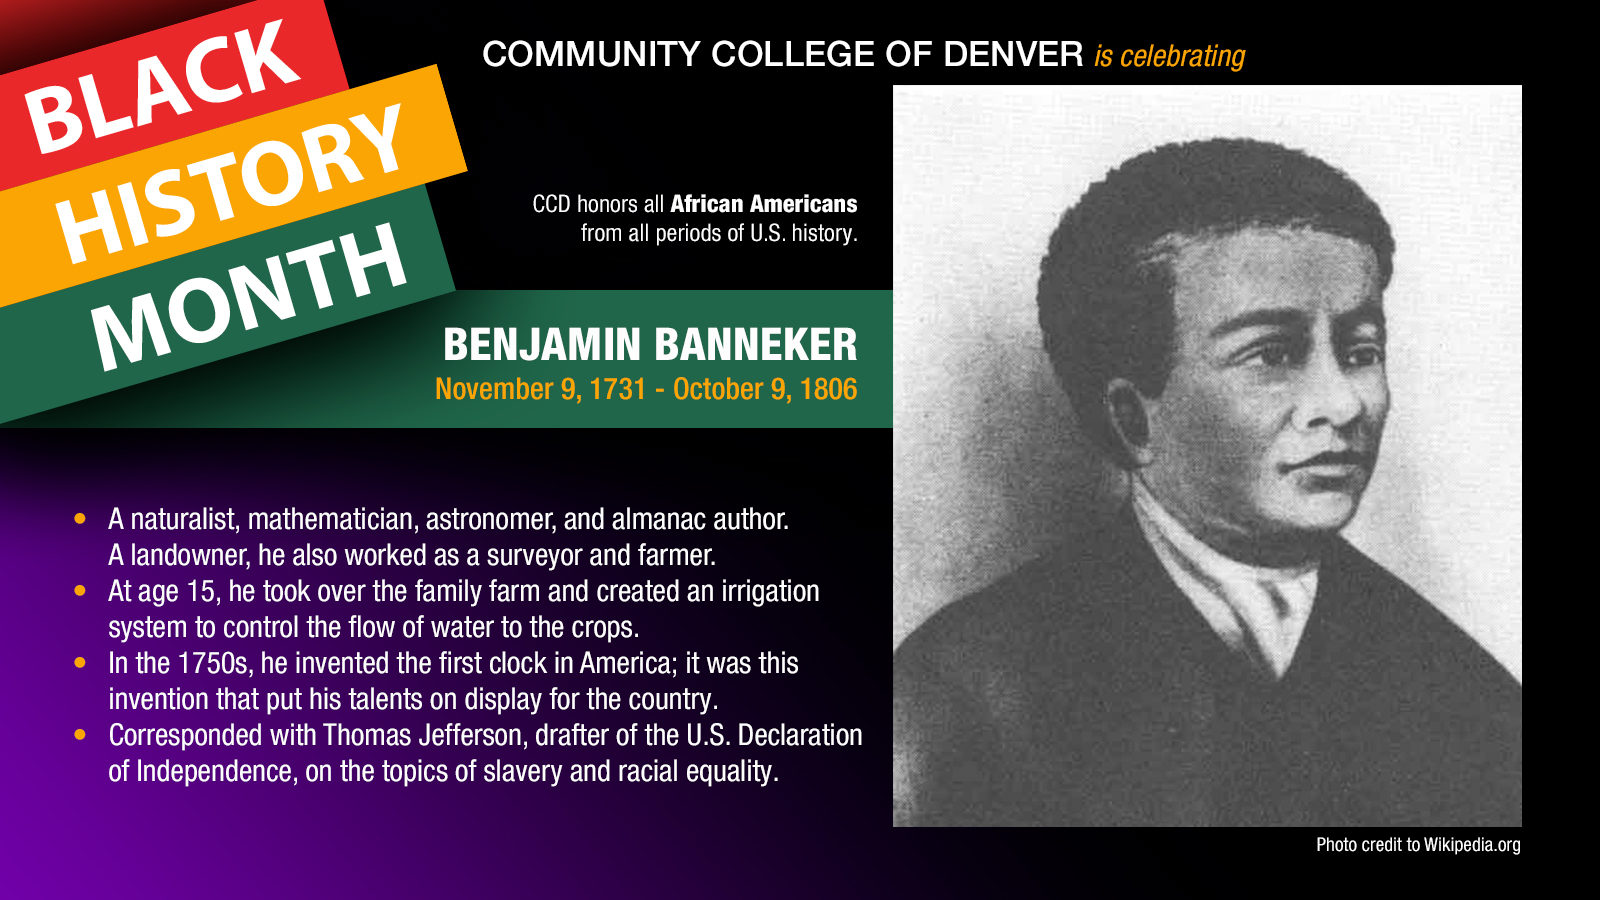 Black History Month. Benjamin Banneker facts.